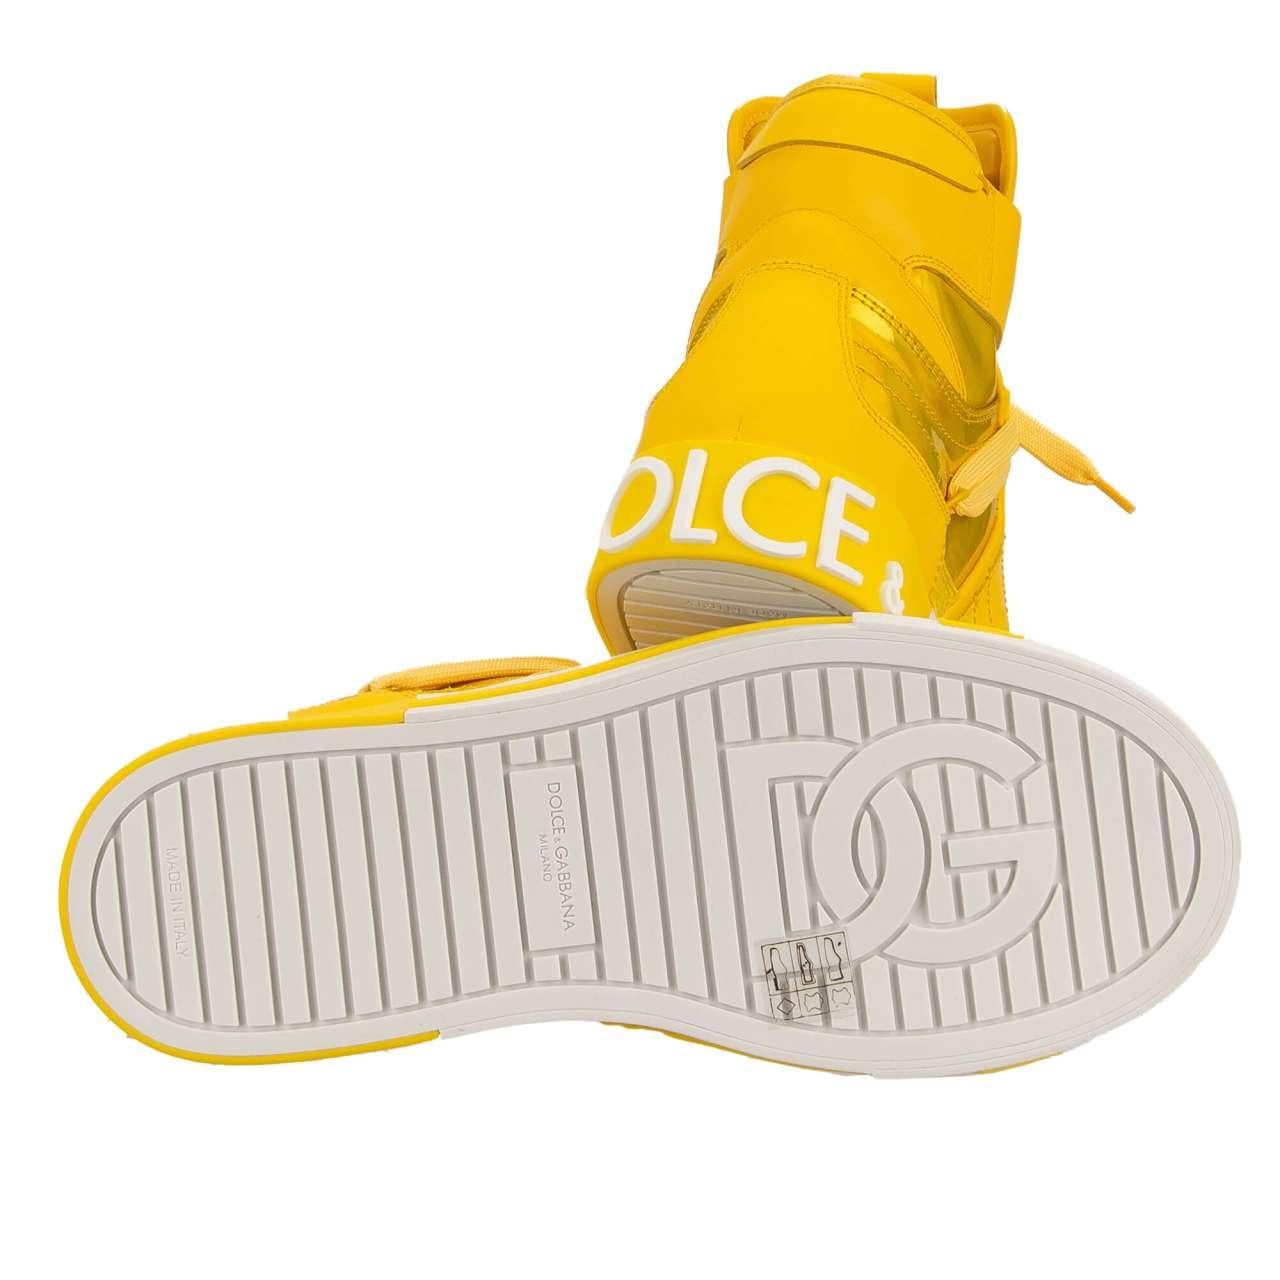 Dolce & Gabbana - DG Logo High Top Sneaker DONNA Rainbow Yellow EUR 38.5 For Sale 4